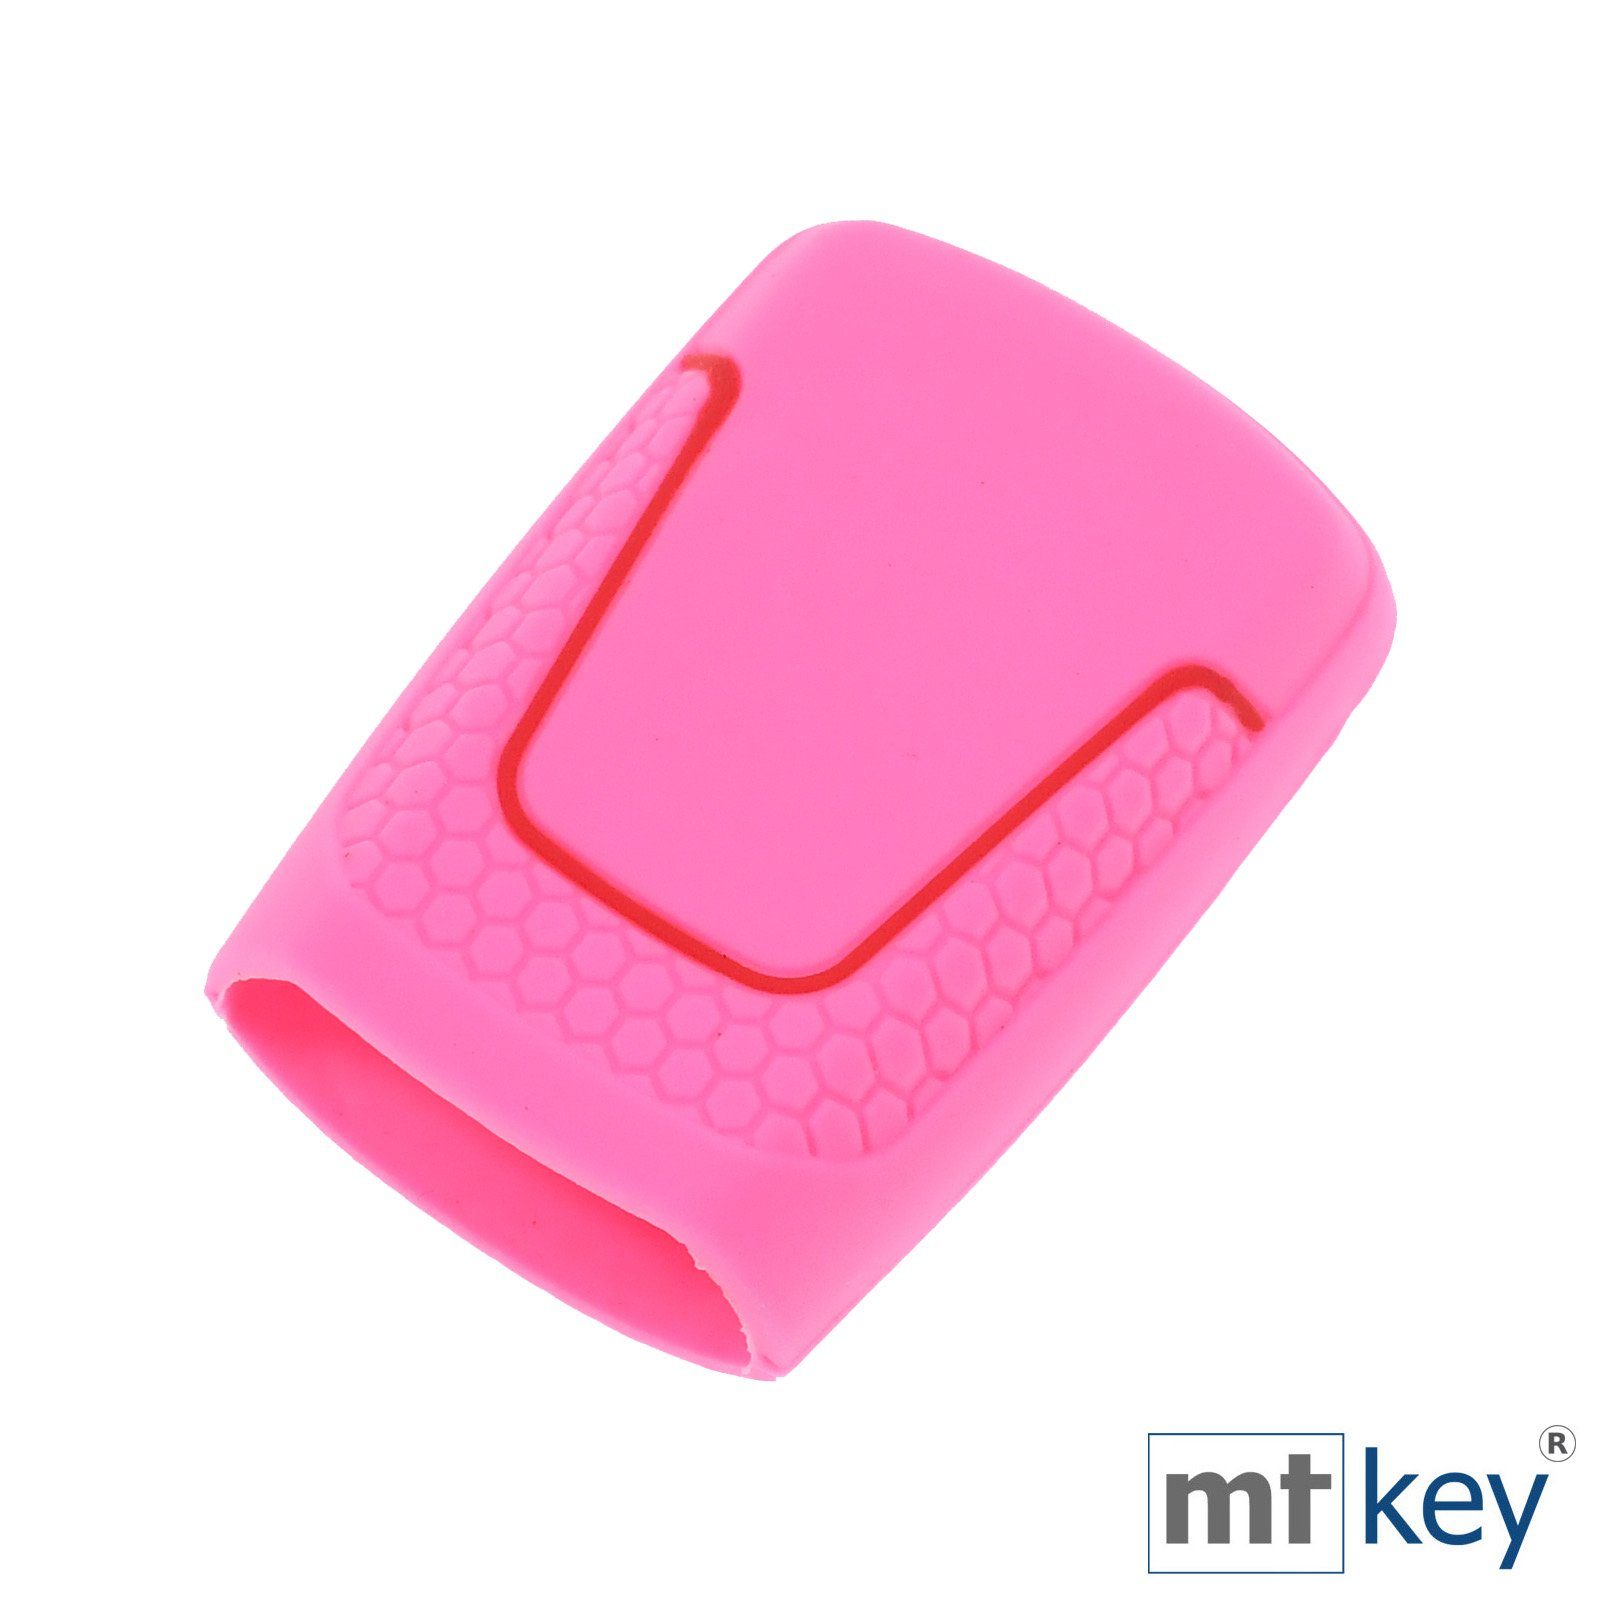 mt-key Schlüsseltasche Silikon SMARTKEY + für Q5 A4 A5 Wabe Rosa KEYLESS Schlüsselband, 3 TT A6 A8 Autoschlüssel Design Tasten Q8 Schutzhülle im Audi Q2 A7 Q7